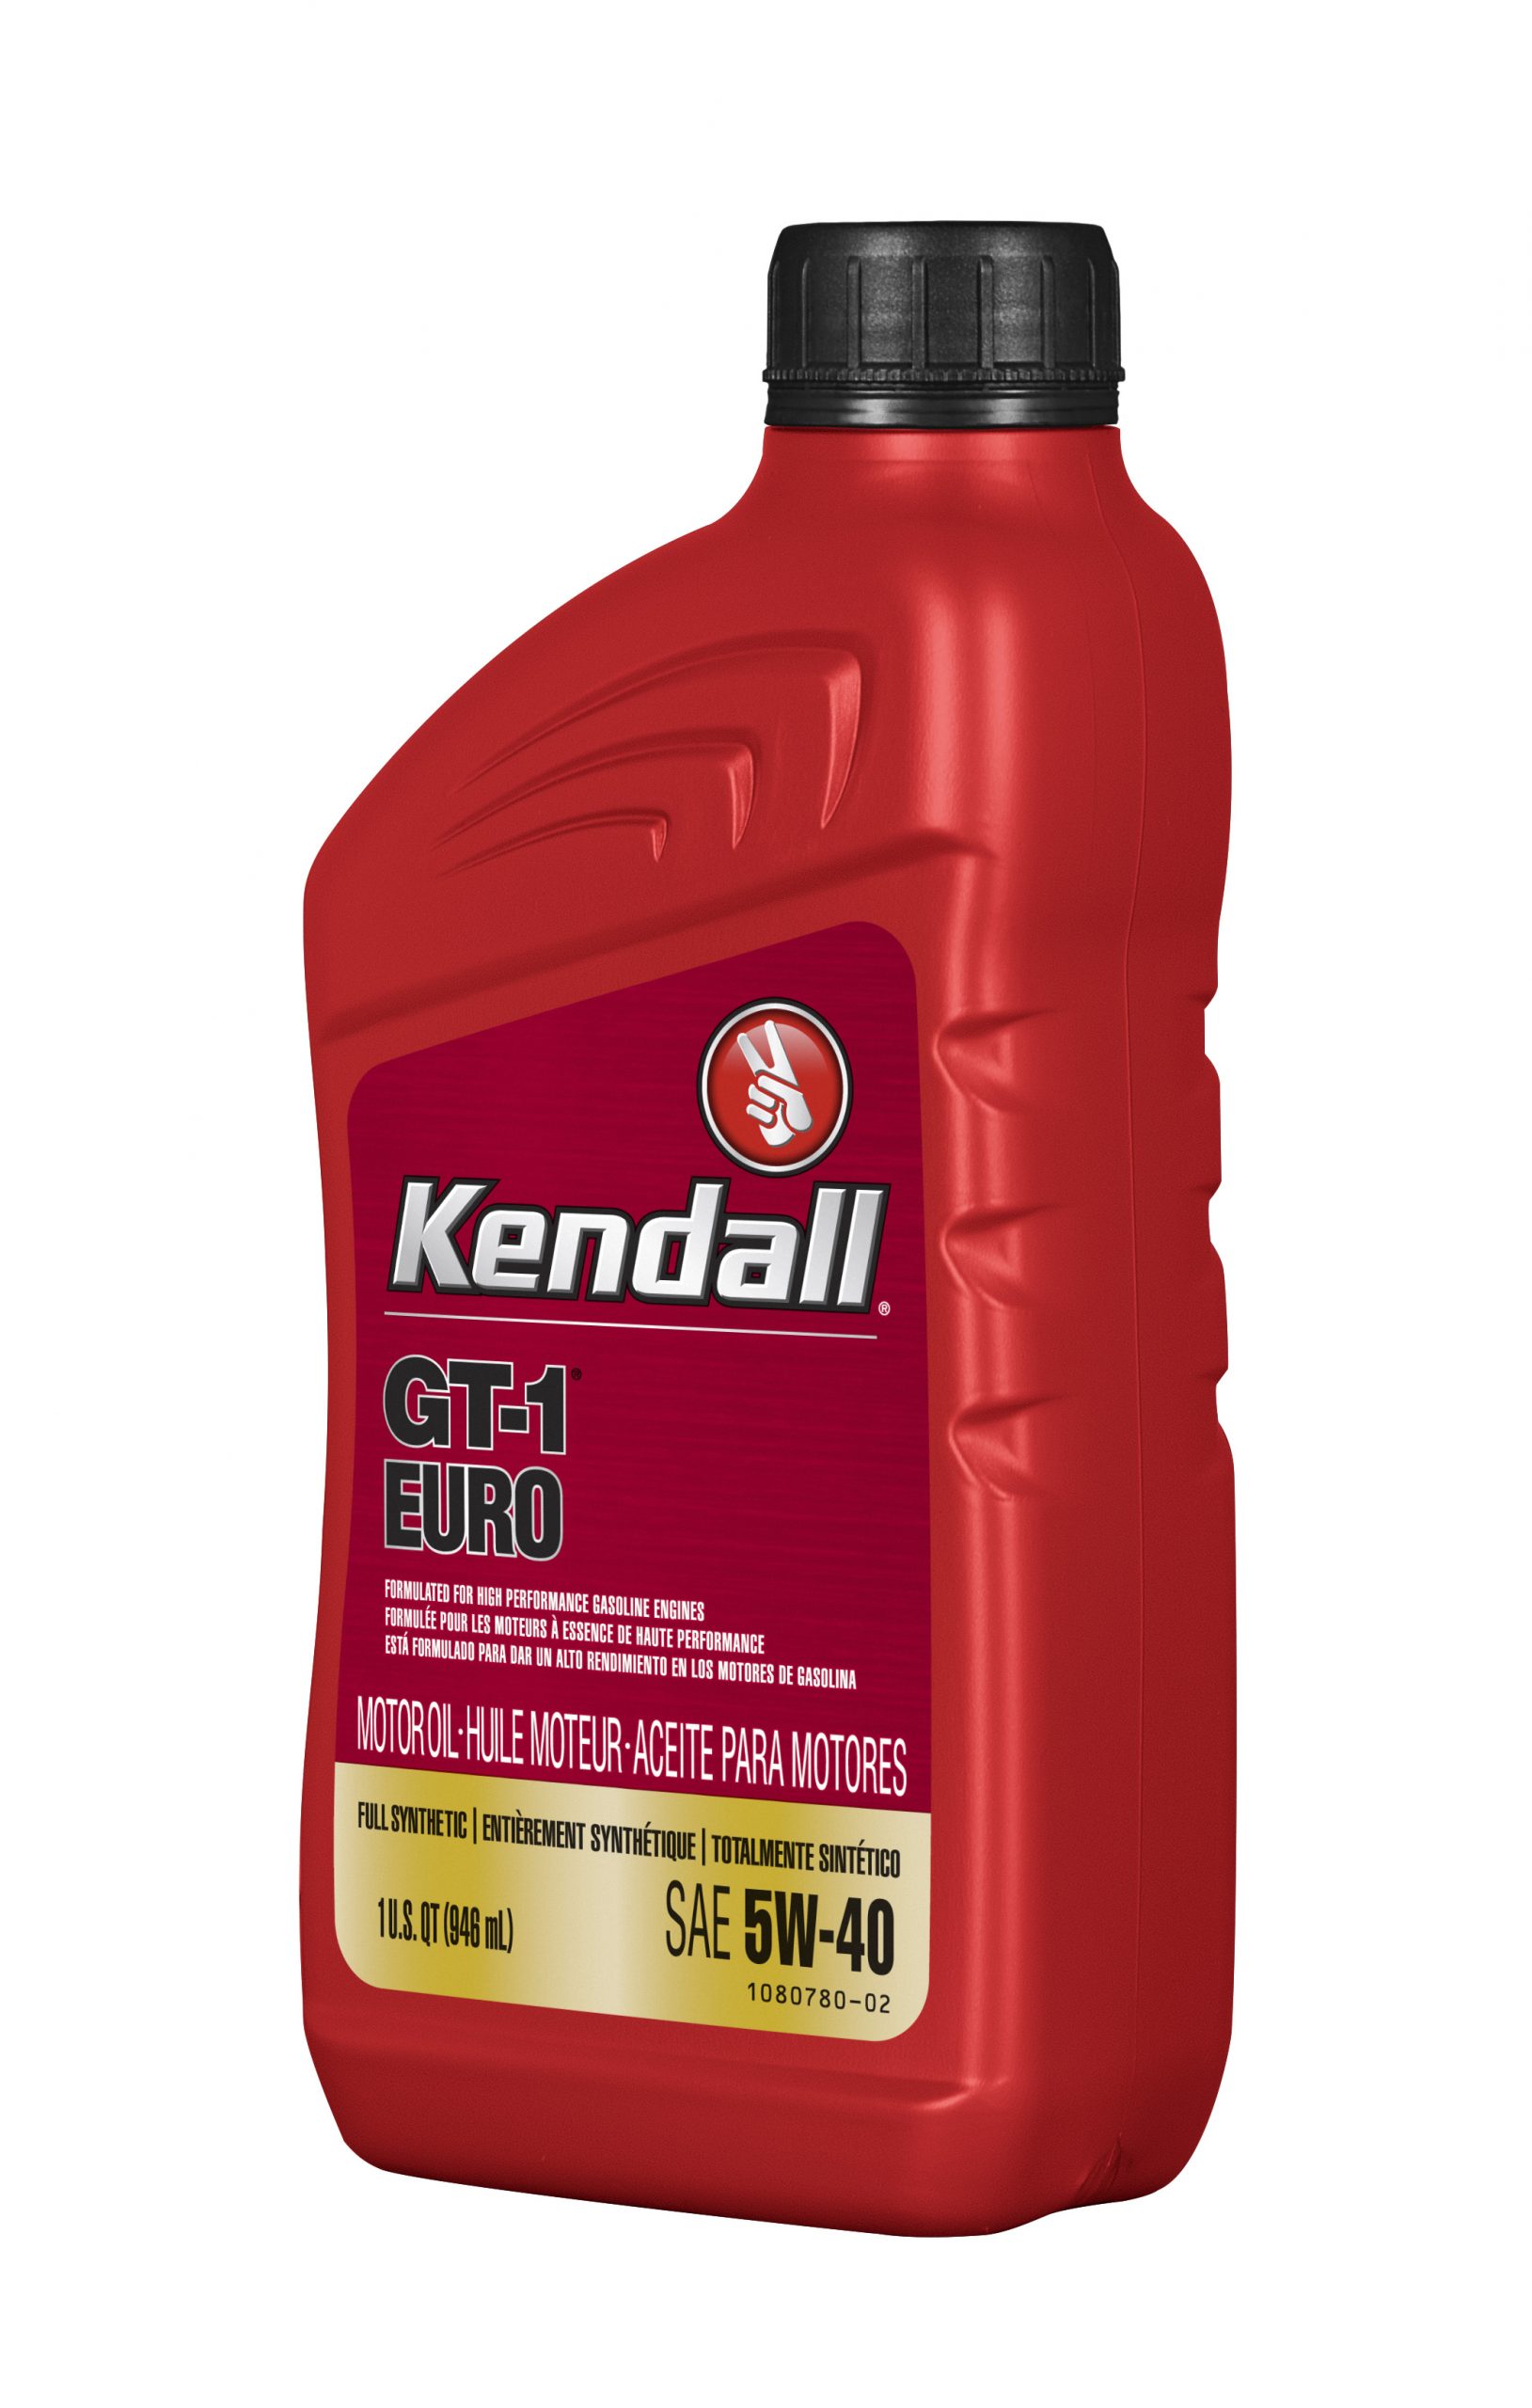 Kendall GT-1 FS 5W-40 Euro : Kendall Motor Oil